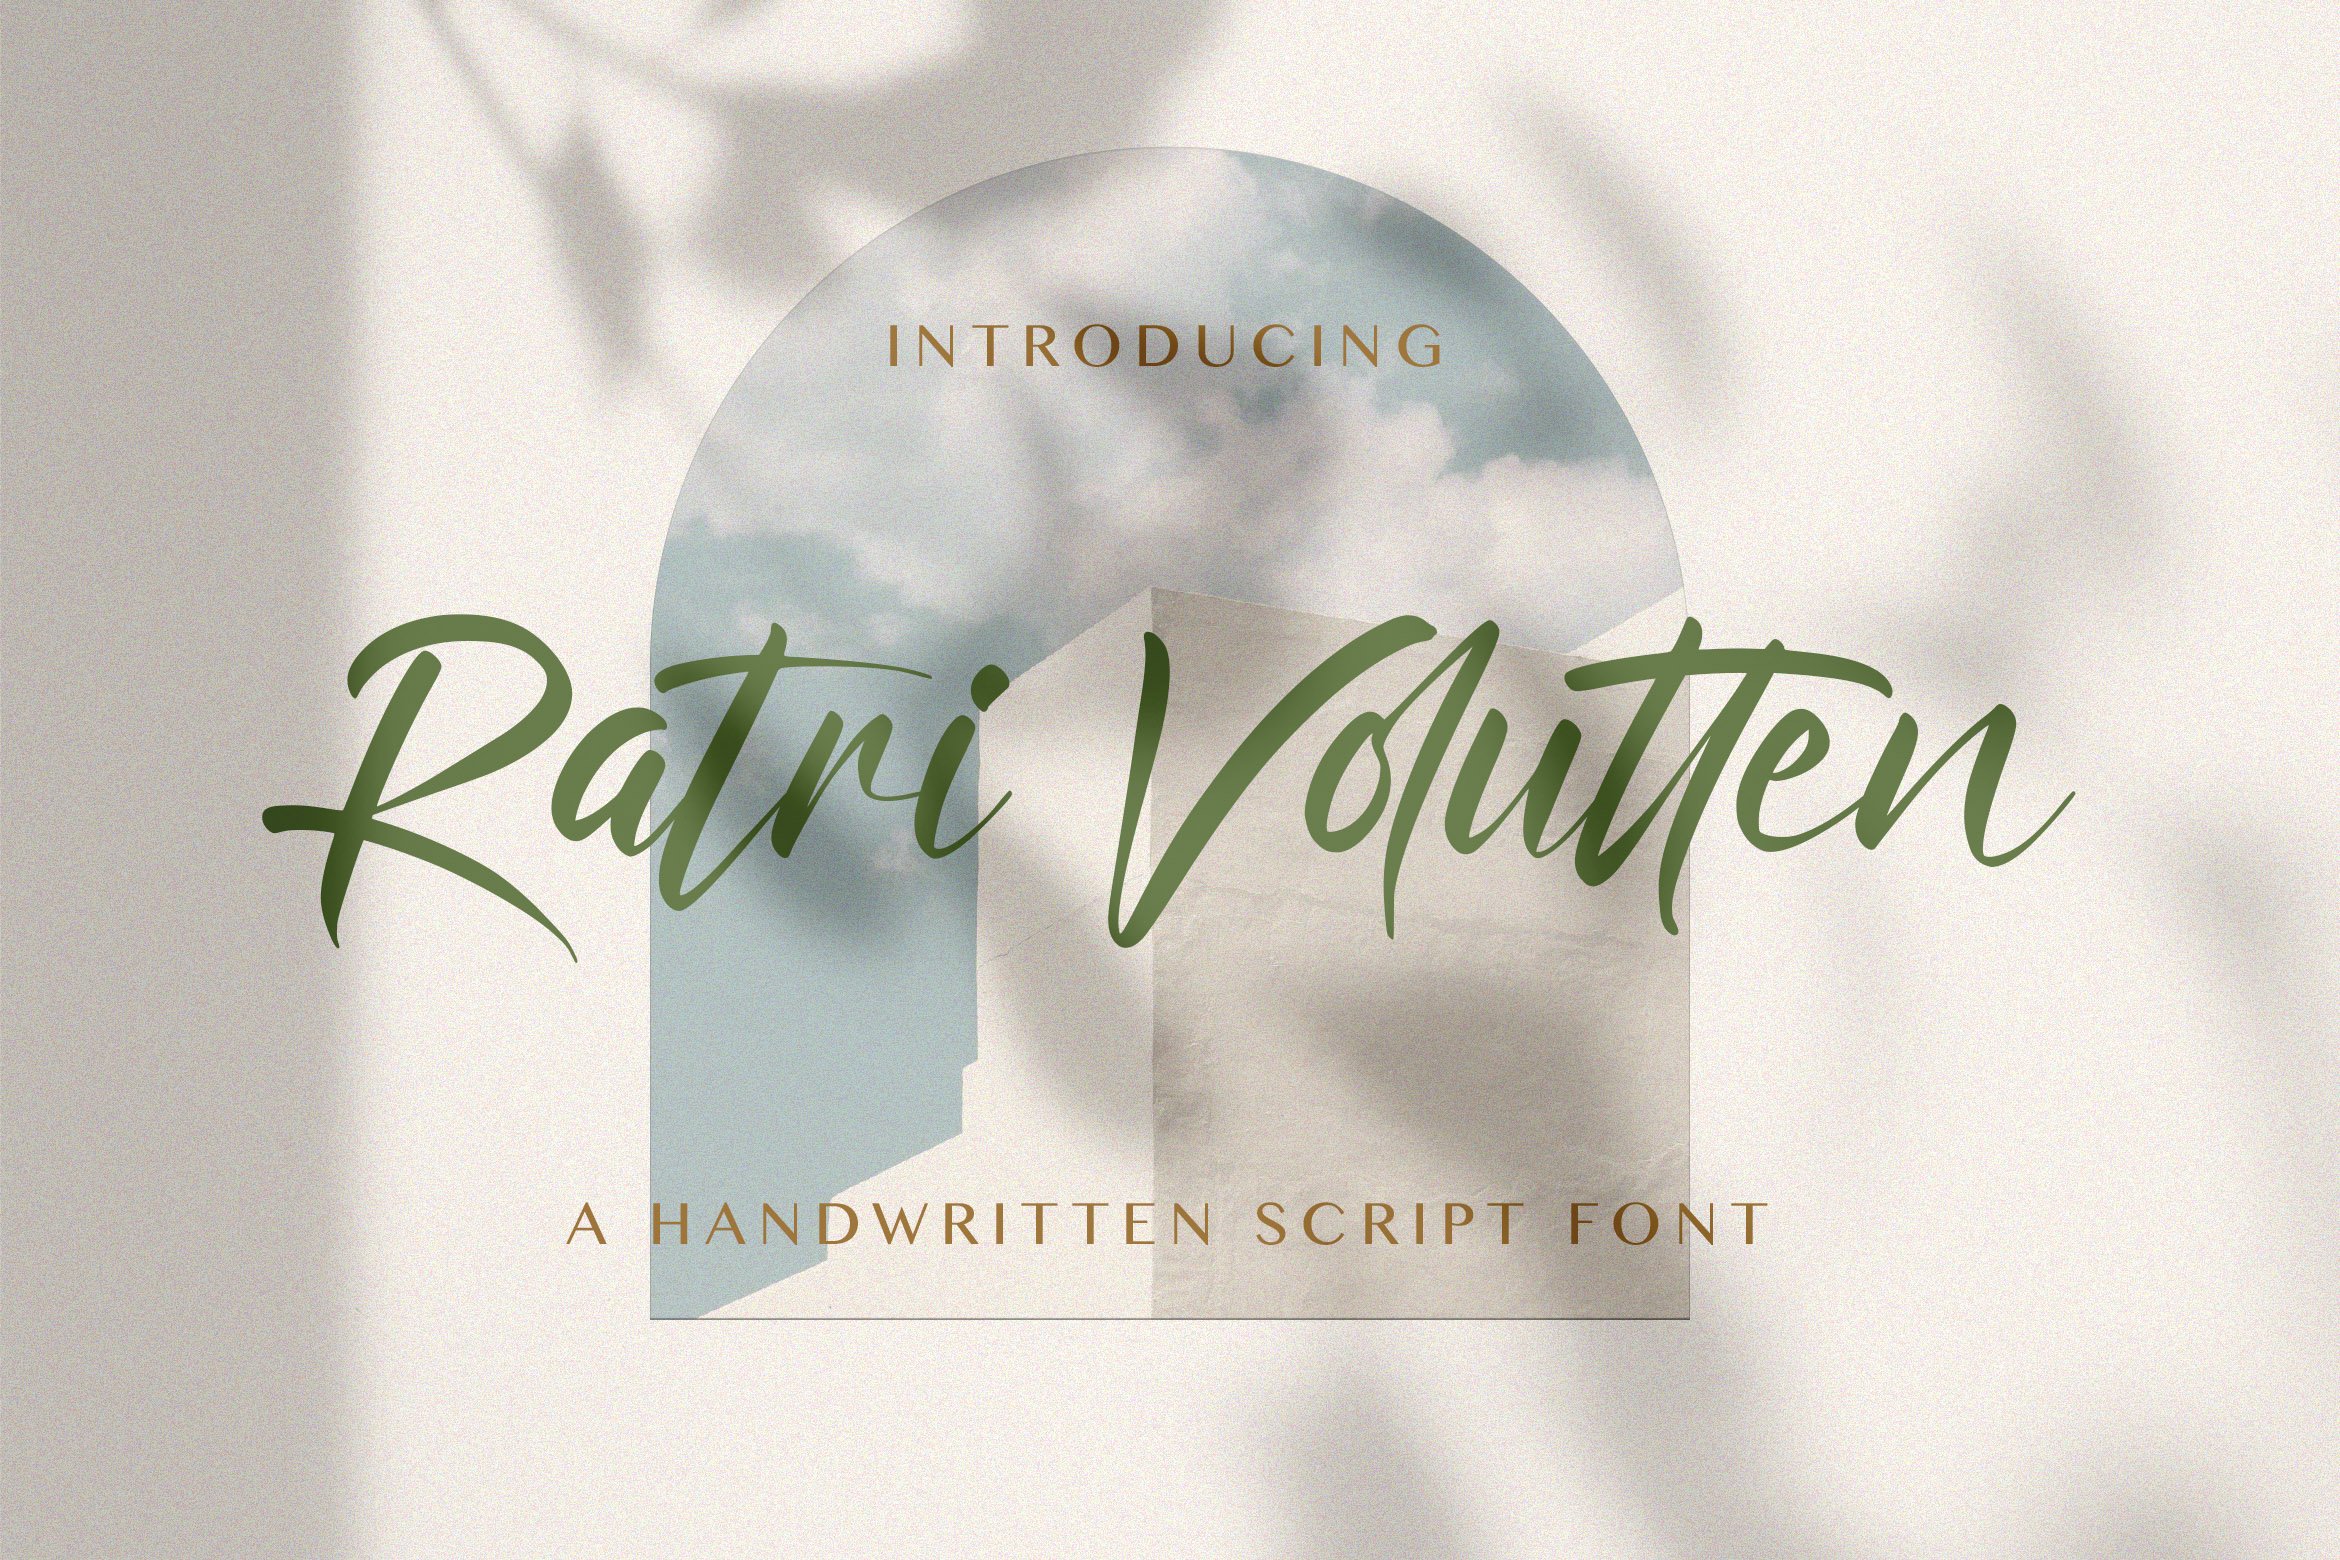 Ratri Volutten - Handwritten Font cover image.